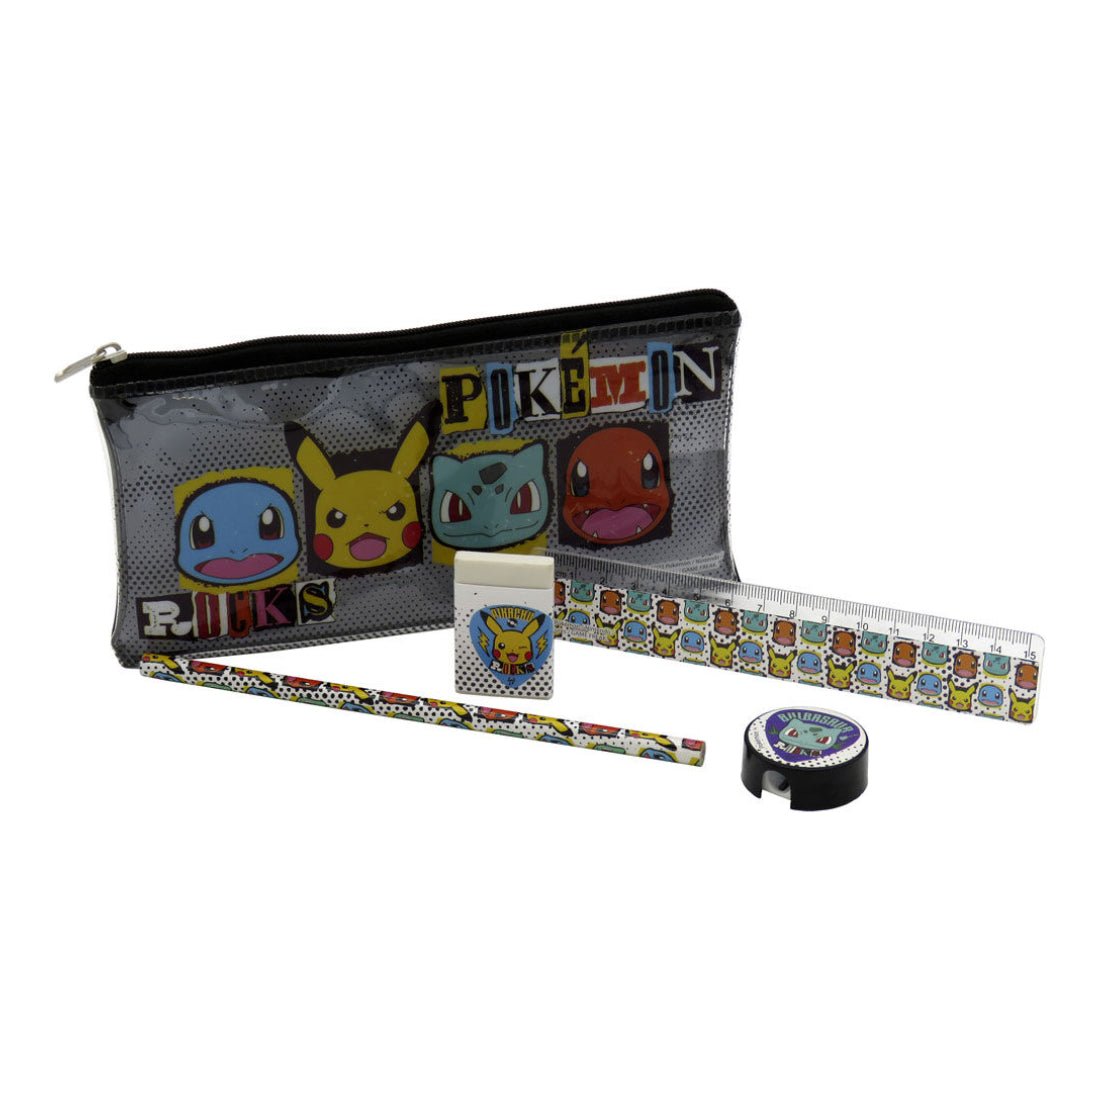 Pokémon Plastic Pencil Case With Stationeries - أدوات مدرسية - Store 974 | ستور ٩٧٤